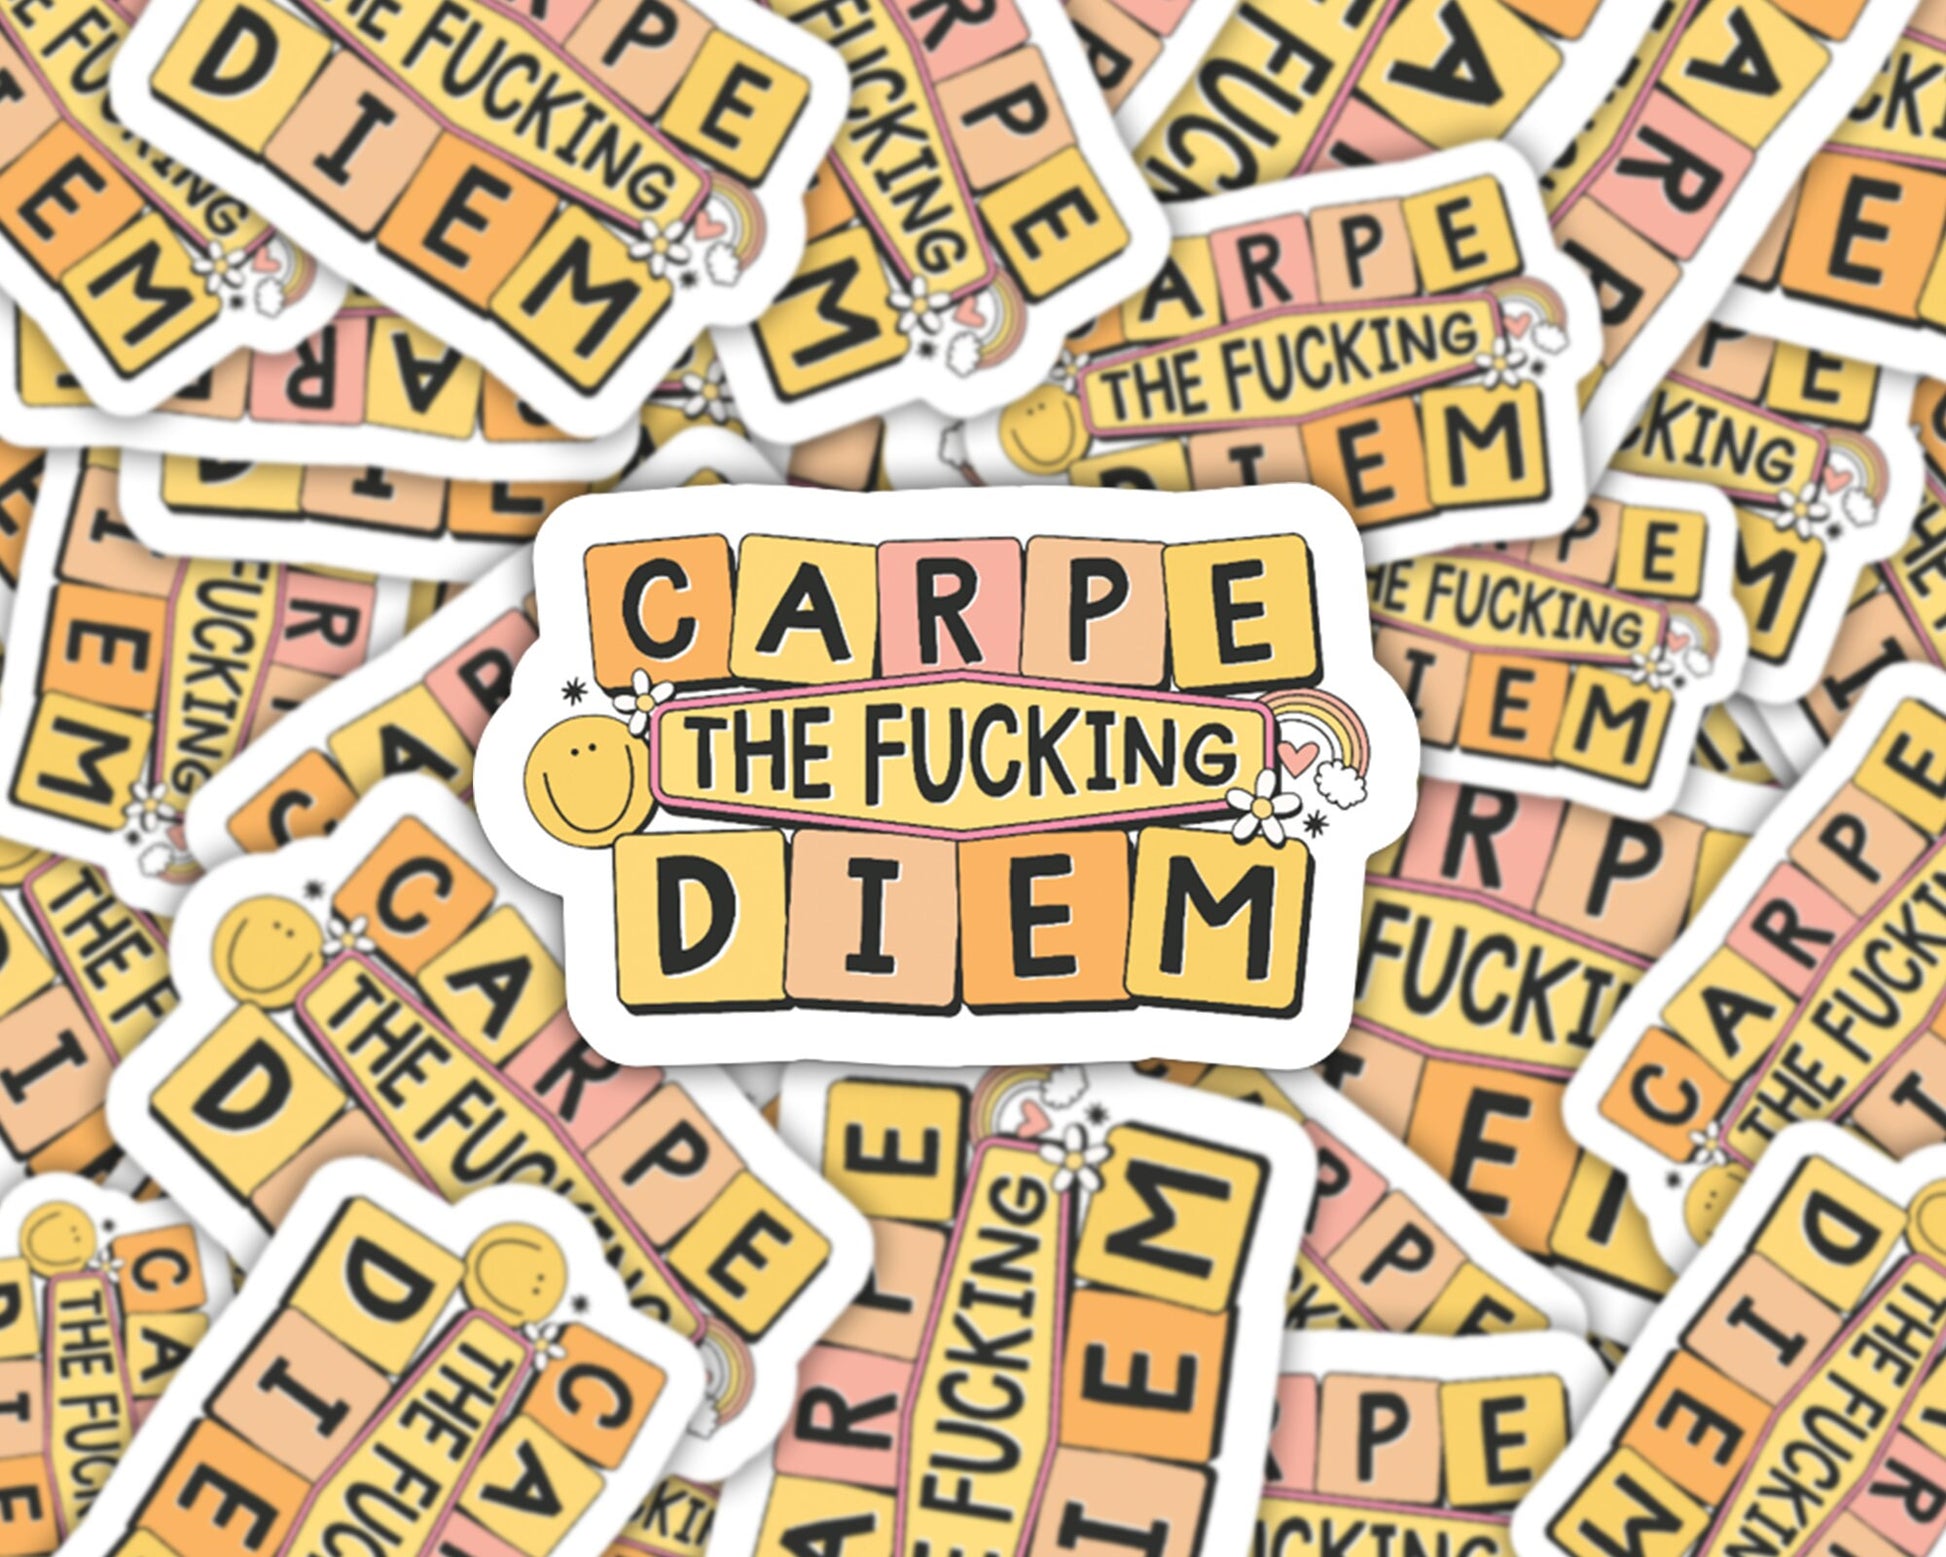 carpe diem sticker, water bottle sticker, journal sticker, cuss word stickers, adult humor stickers, stickers for friends, lucky stickers